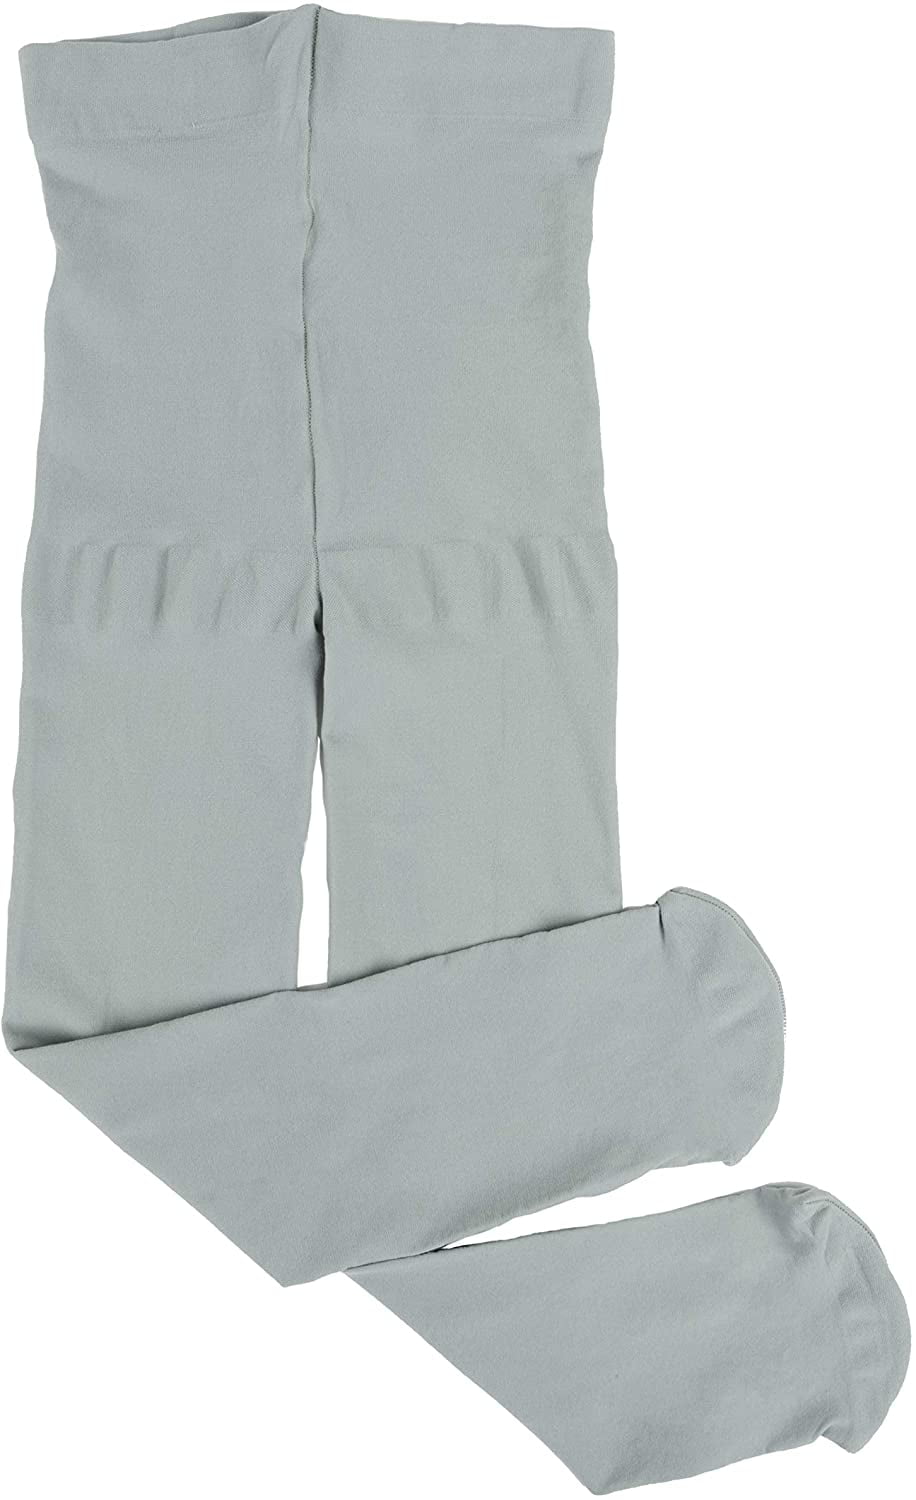 Leveret Light Grey Solid Girls Legging Size 2 Toddler - 14 Variety Of Colors 